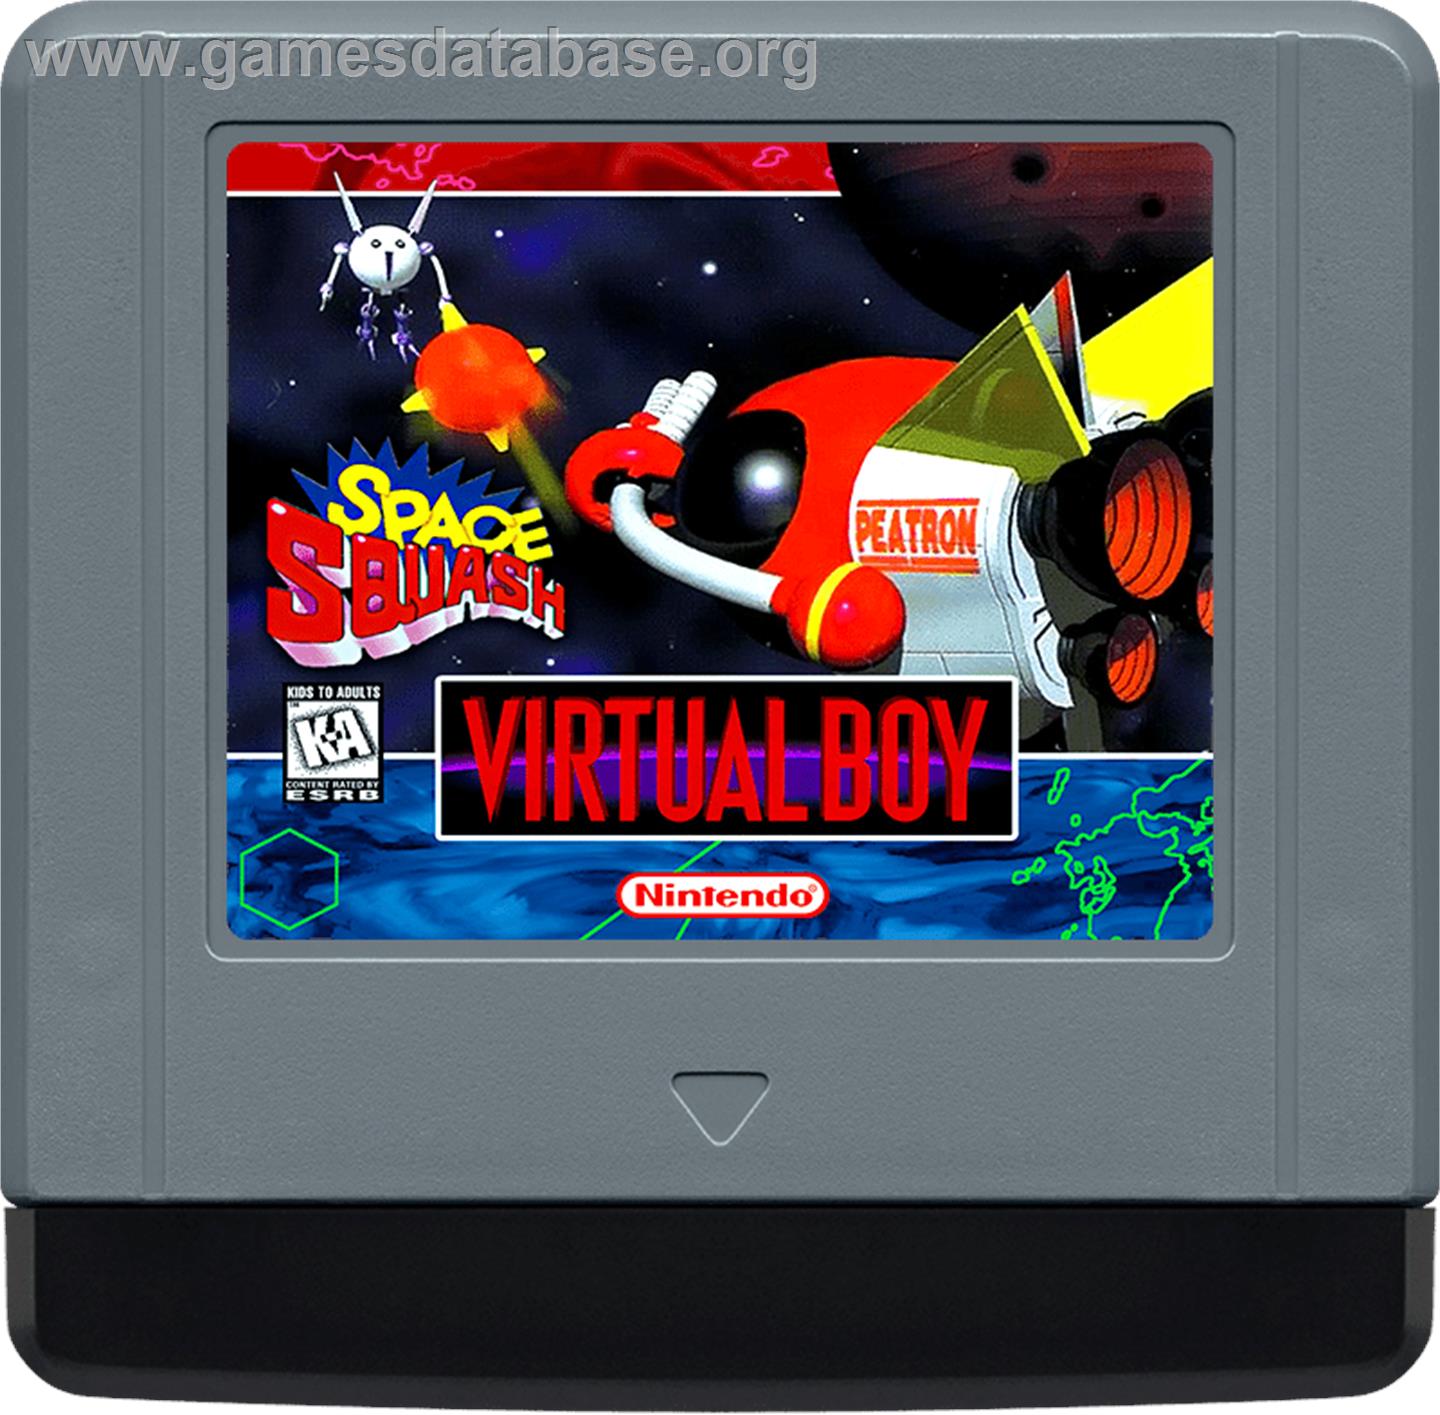 Space Squash - Nintendo Virtual Boy - Artwork - Cartridge